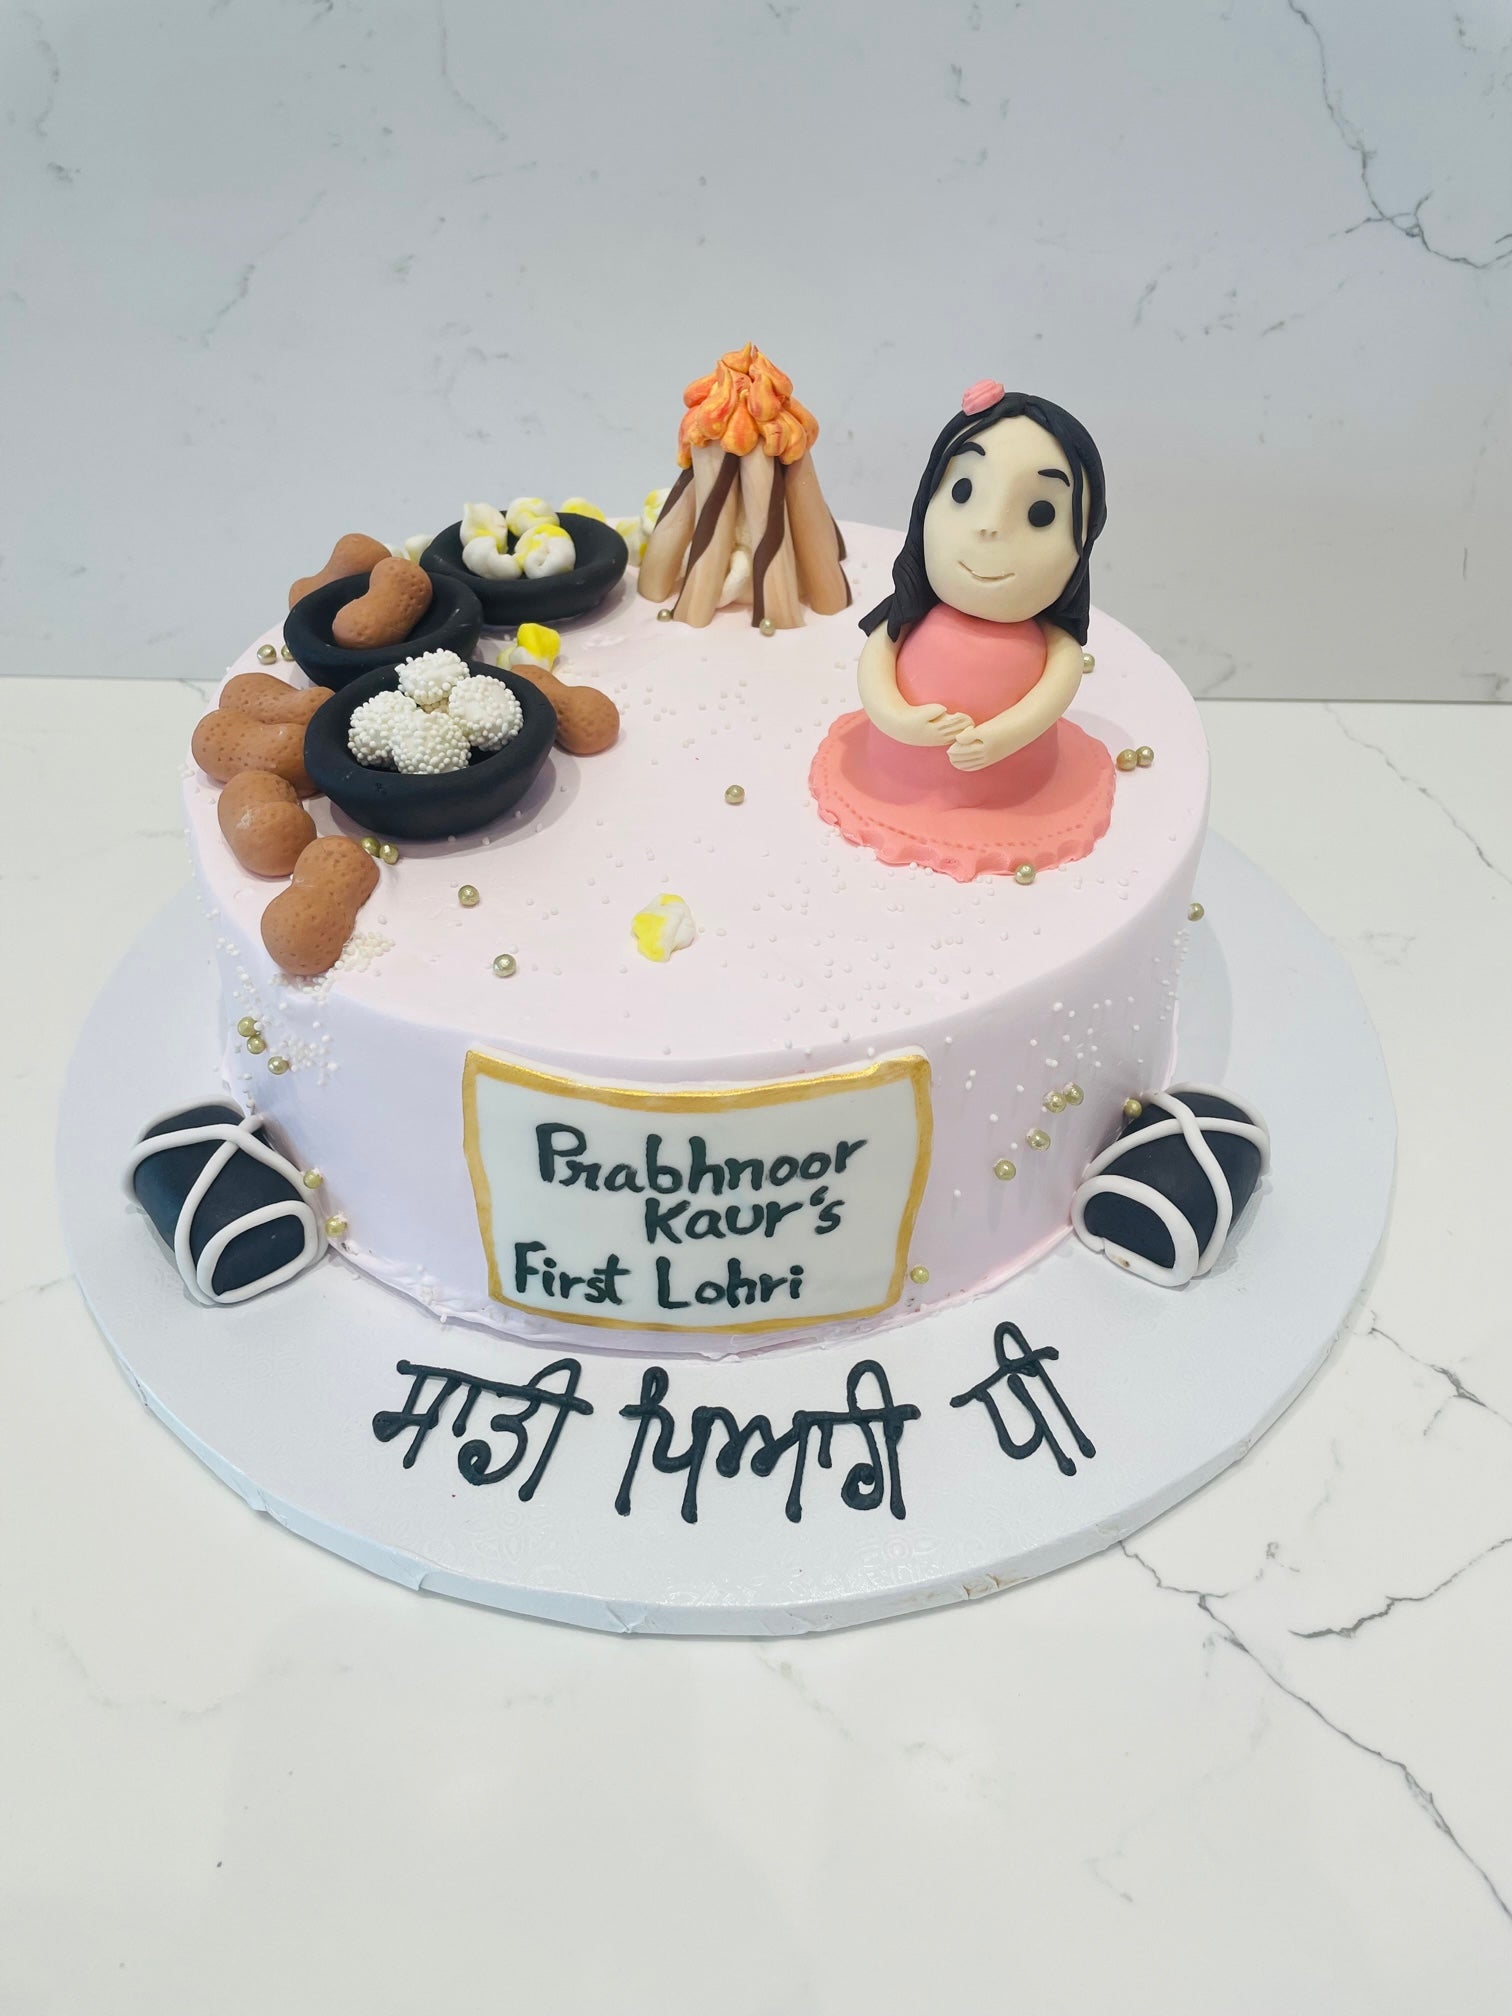 Prince Lohri Birthday Cake - Rashmi's Bakery